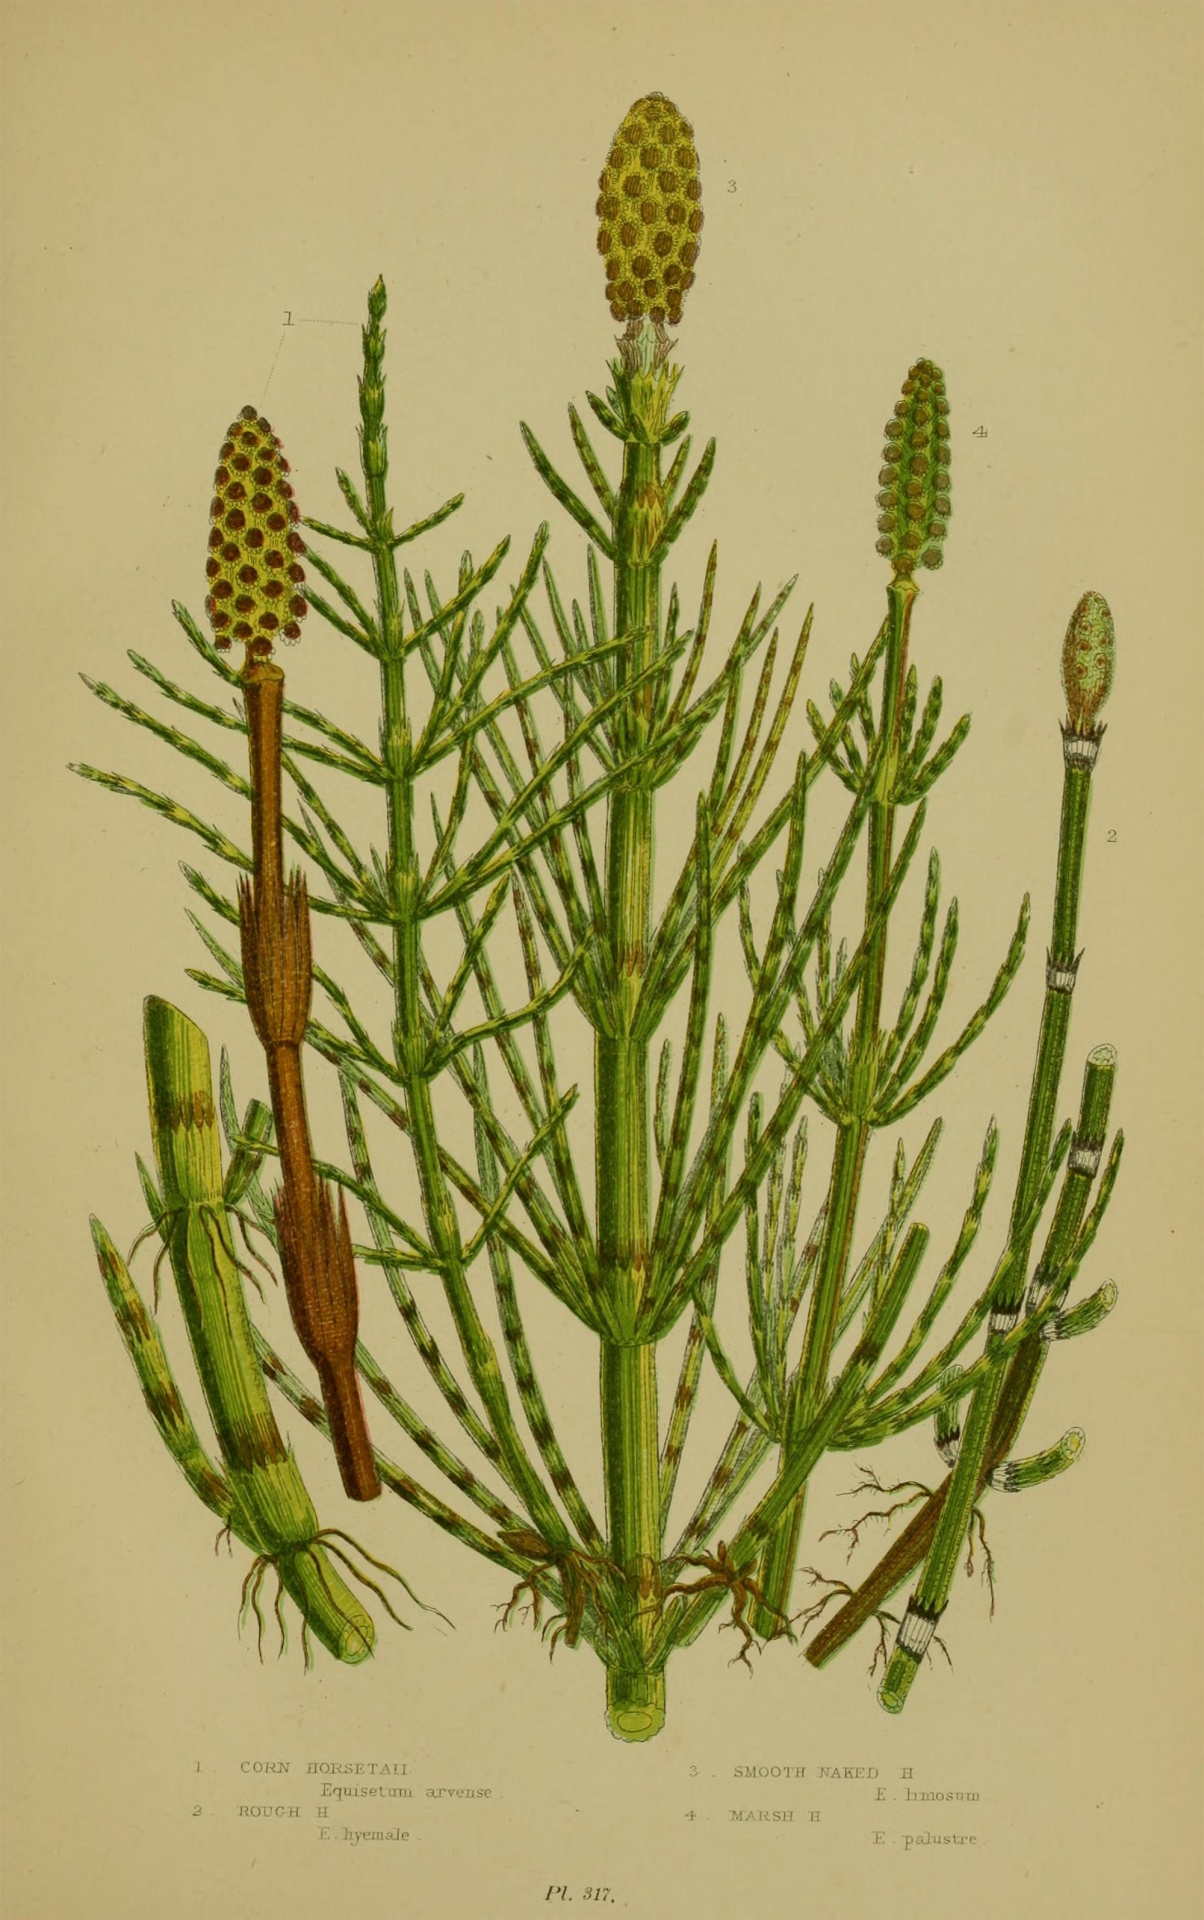 Vintage art illustration of horsetail, wild grass on original background with plant details